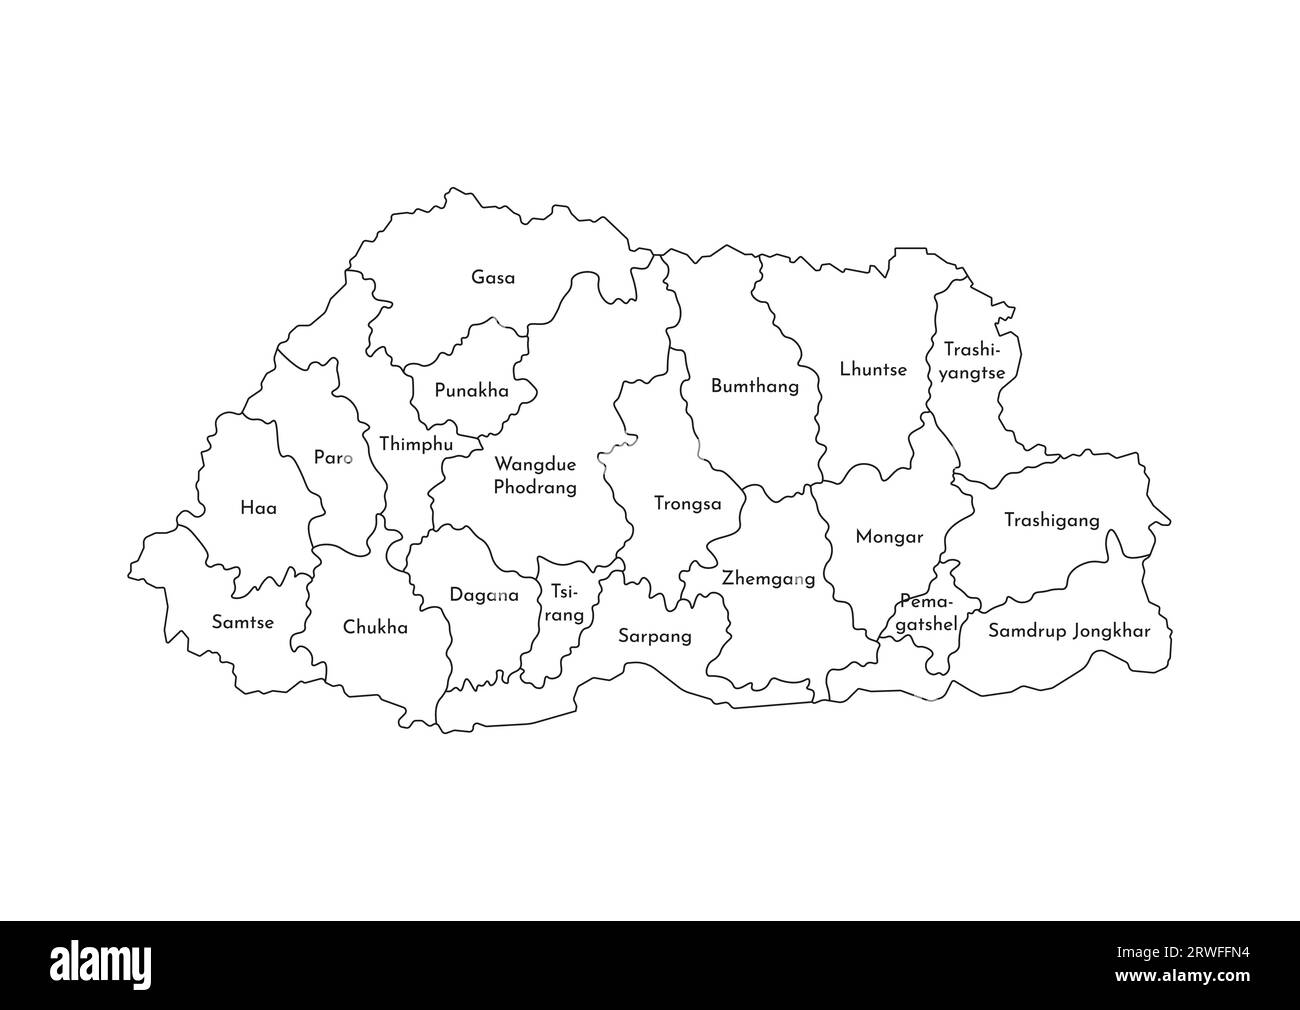 Vector Map Portugal Districts Autonomous Regions Subdivided Municipalities  Each Region Stock Vector by ©Jktu_21 175841466